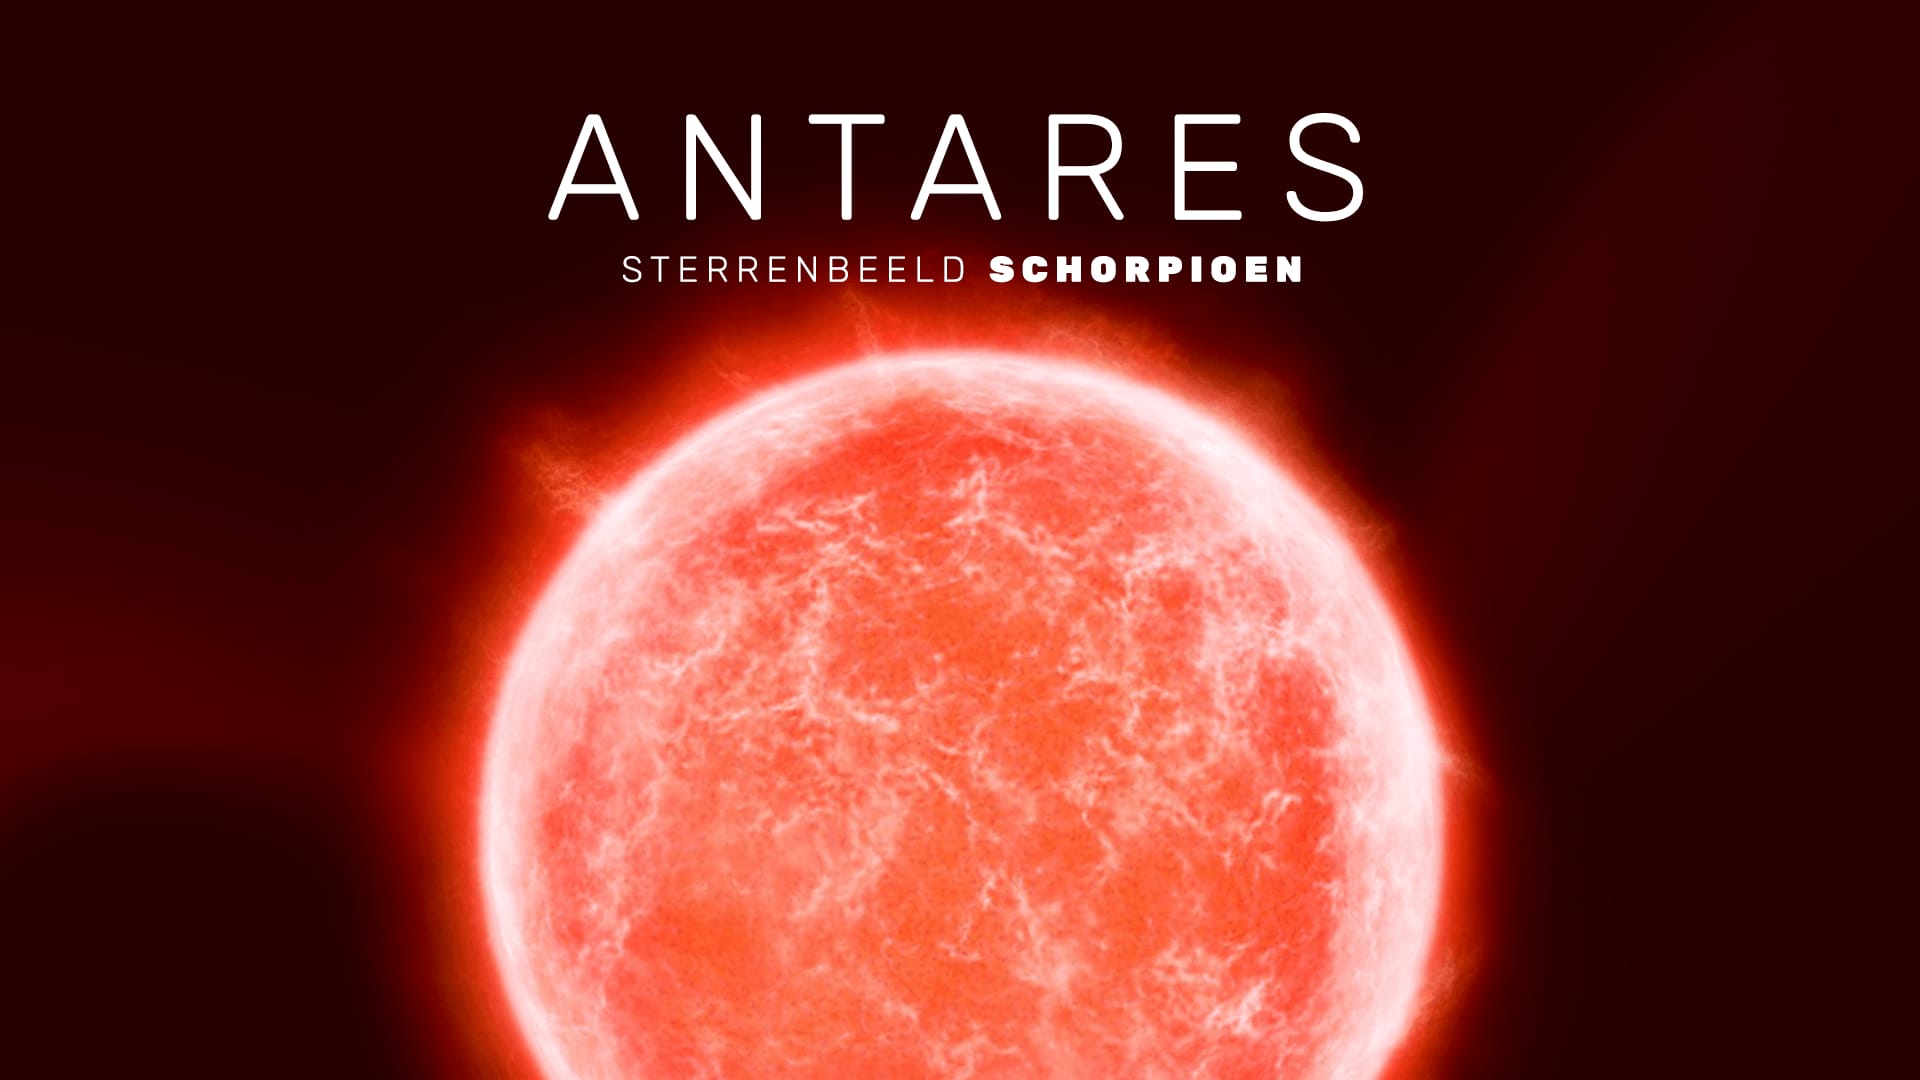 Antares star